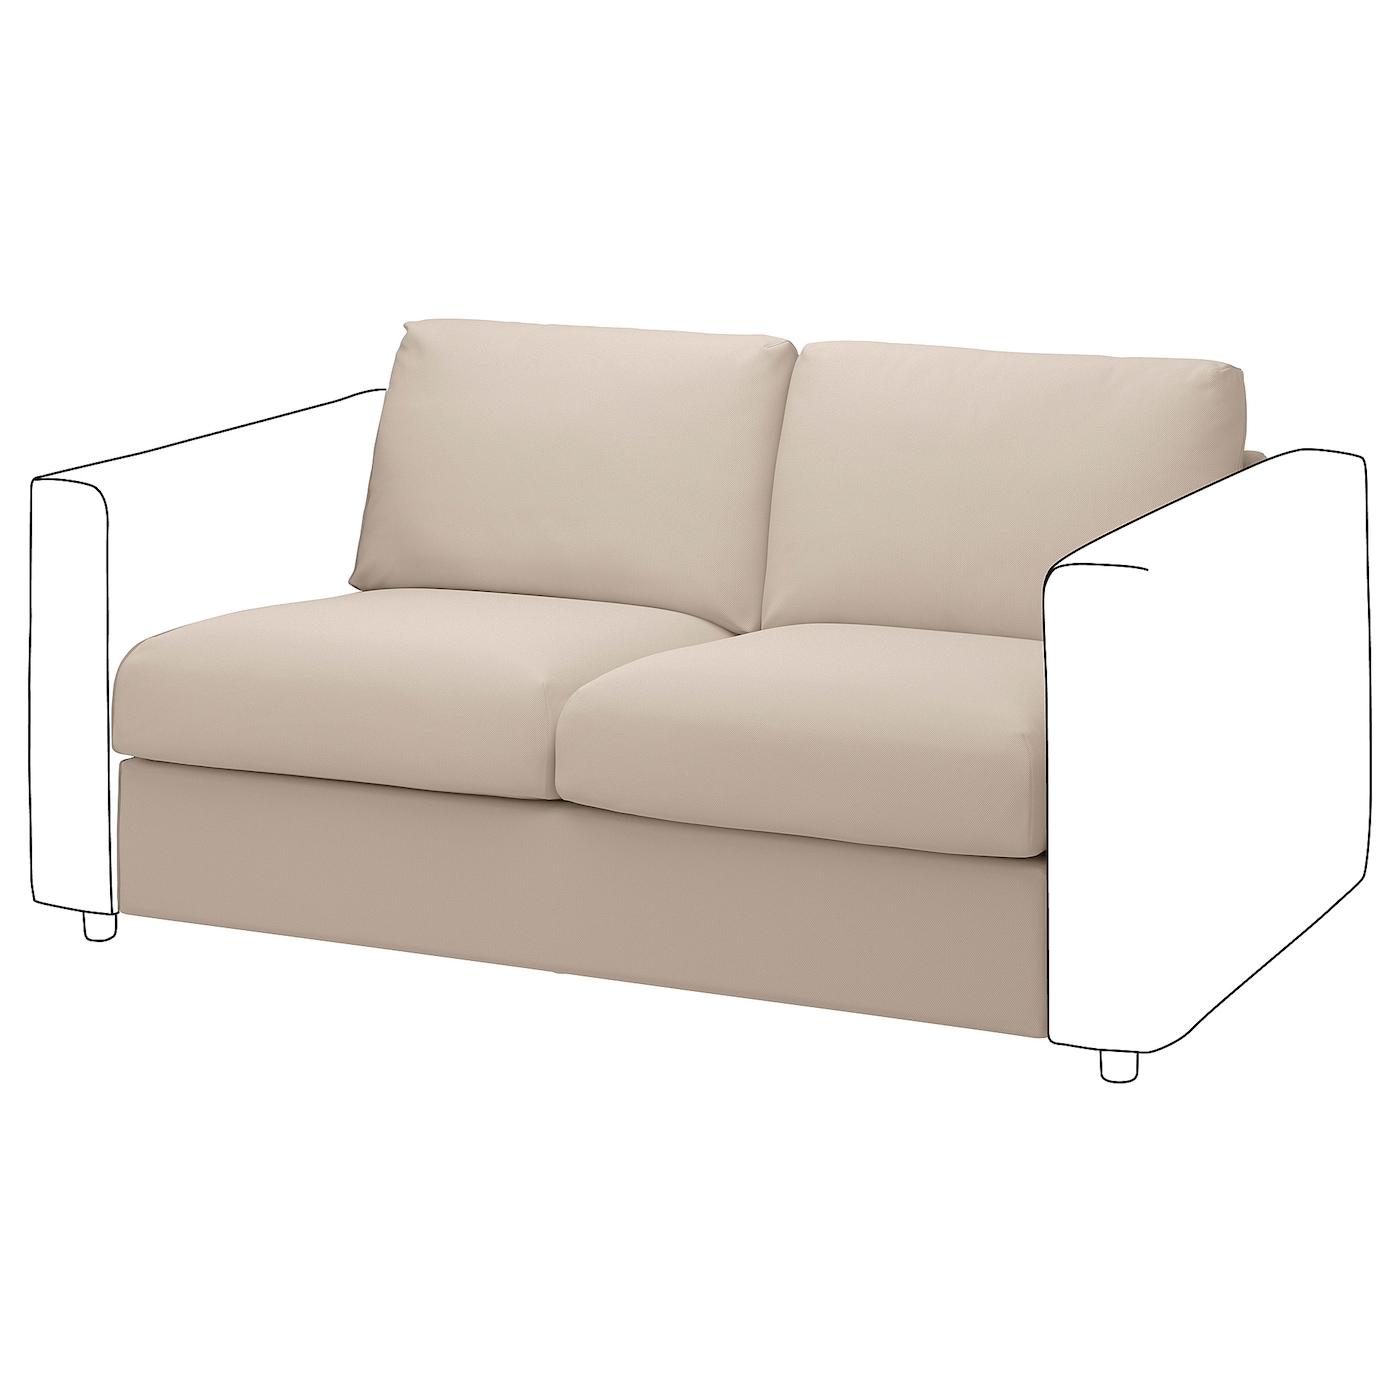 ВИМЛЕ 2 раскладывающийся диван, Халларп бежевый VIMLE IKEA